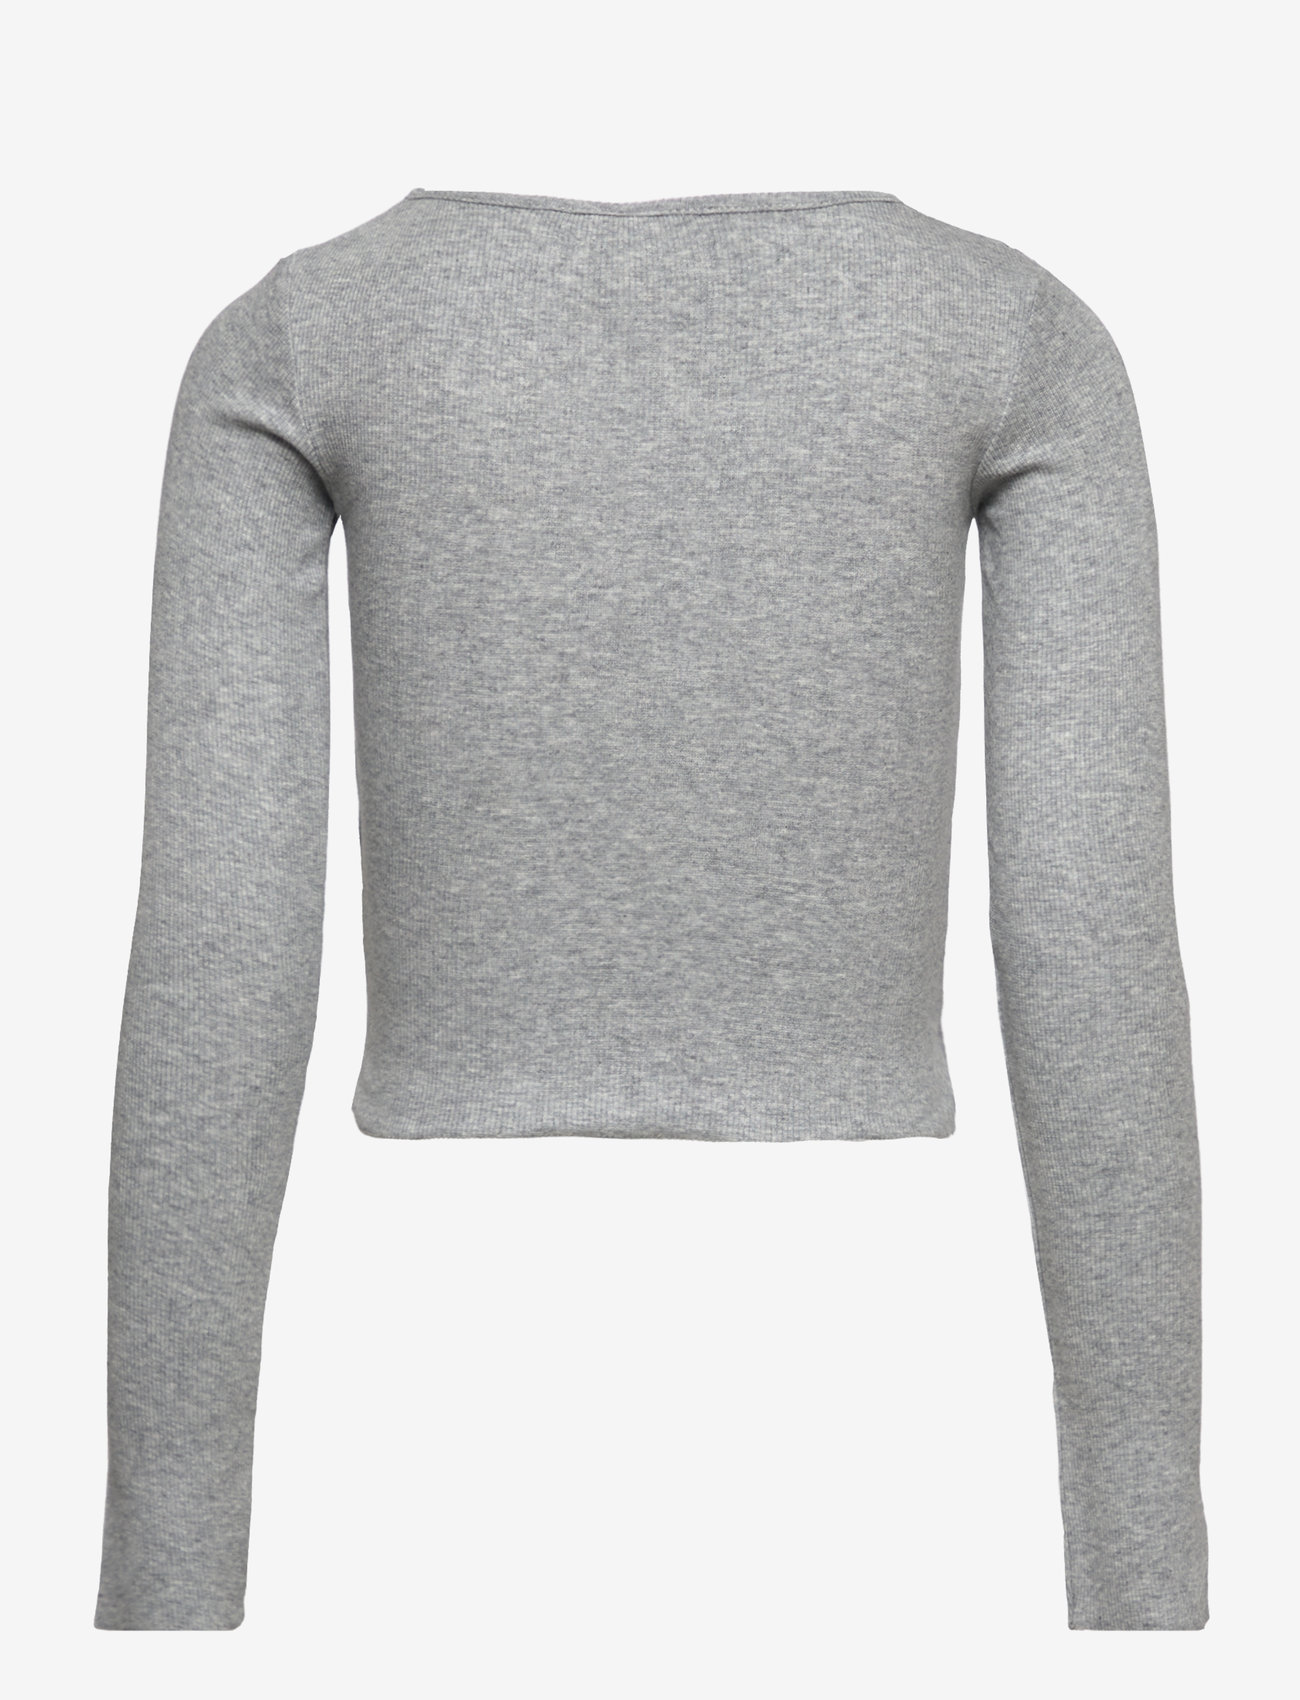 Sofie Schnoor Young - T-shirt long-sleeve - marškinėliai ilgomis rankovėmis - grey melange - 1